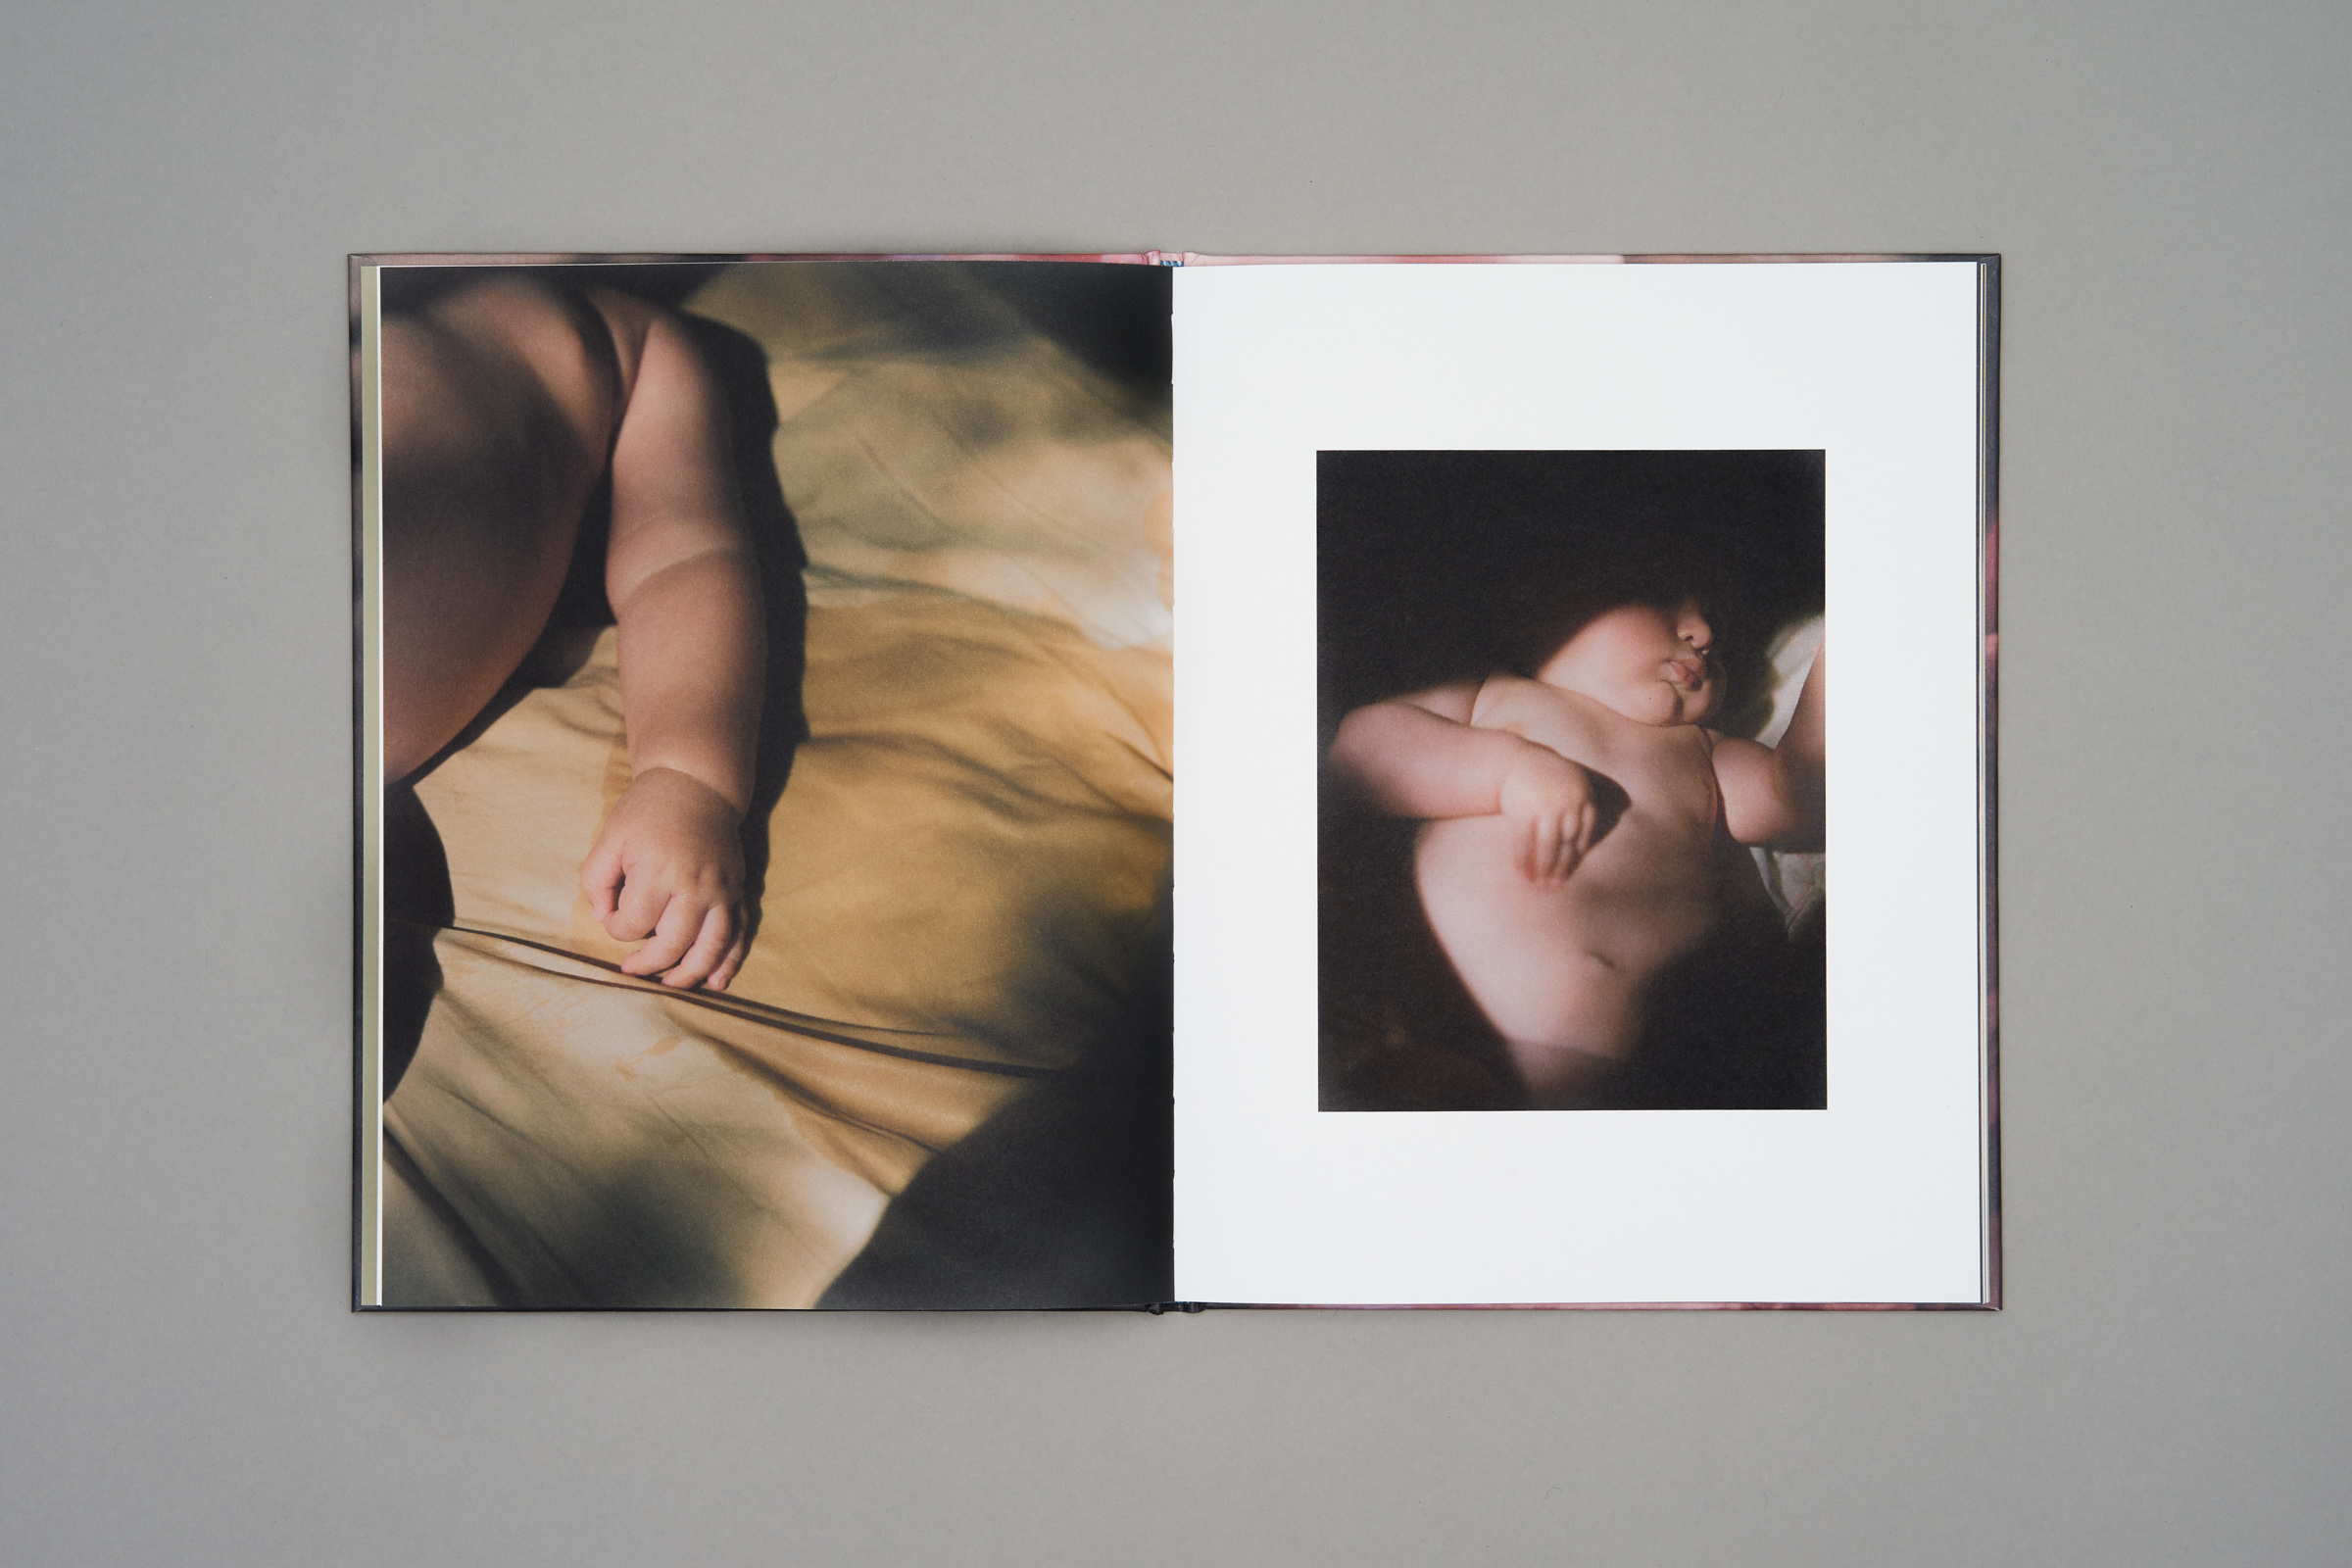 Carlotta Manaigo — A Study on Folds — Book